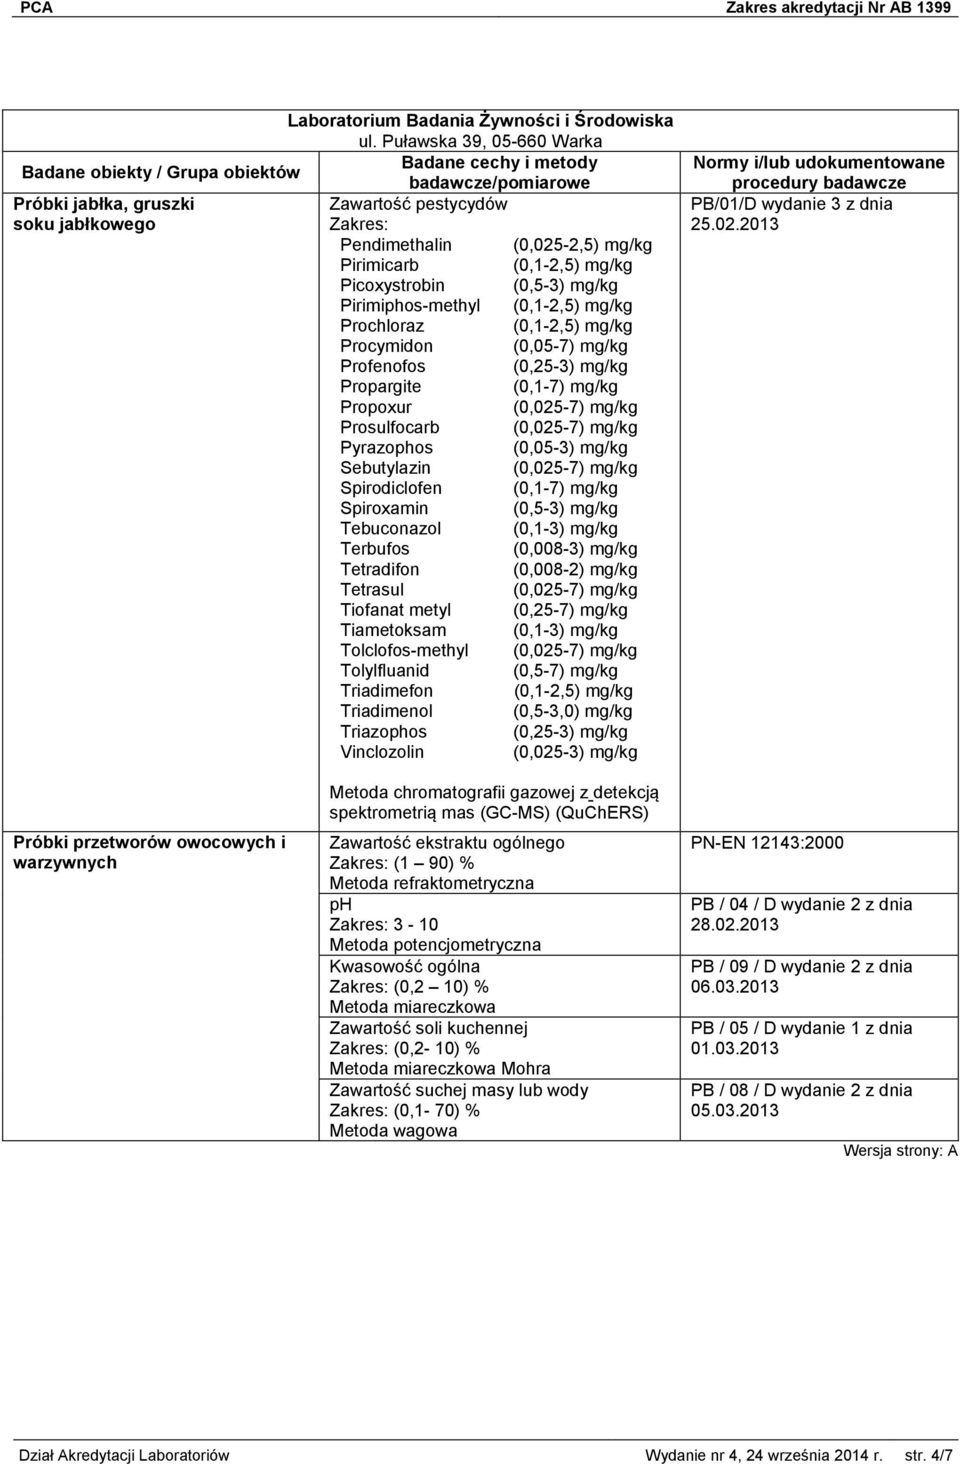 (0,008-2) mg/kg Tetrasul Tiofanat metyl (0,25-7) mg/kg Tiametoksam Tolclofos-methyl Tolylfluanid (0,5-7) mg/kg Triadimefon (0,1-2,5) mg/kg Triadimenol (0,5-3,0) mg/kg Triazophos (0,25-3) mg/kg